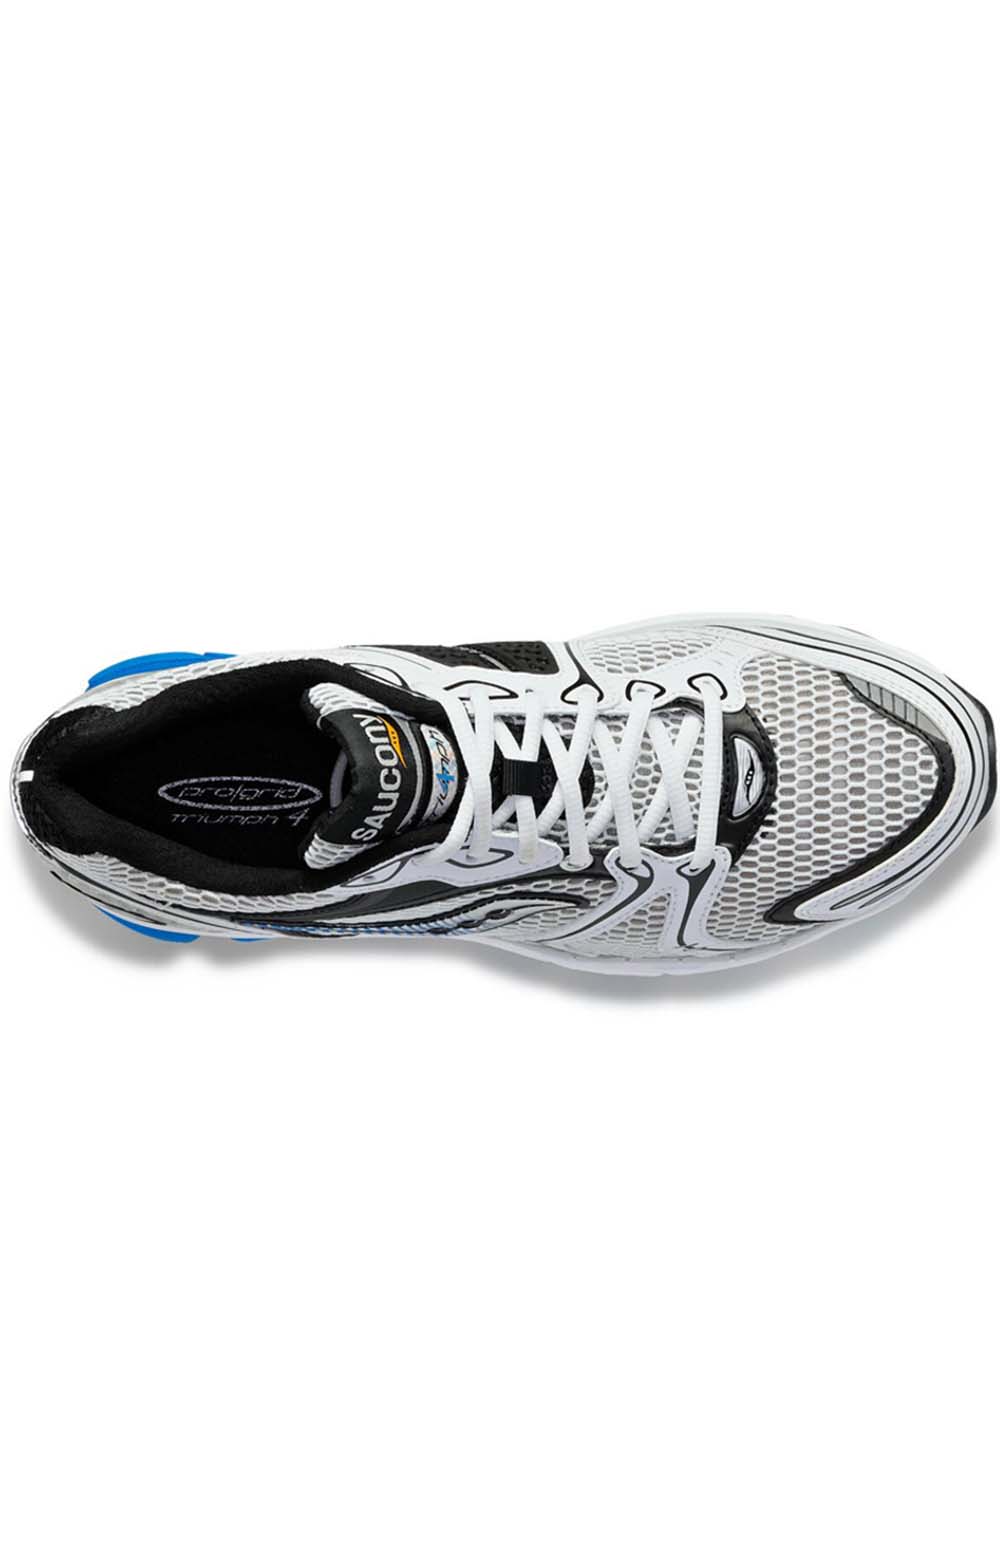 (S70704-3) Progrid Triumph 4 Shoes - White/Silver